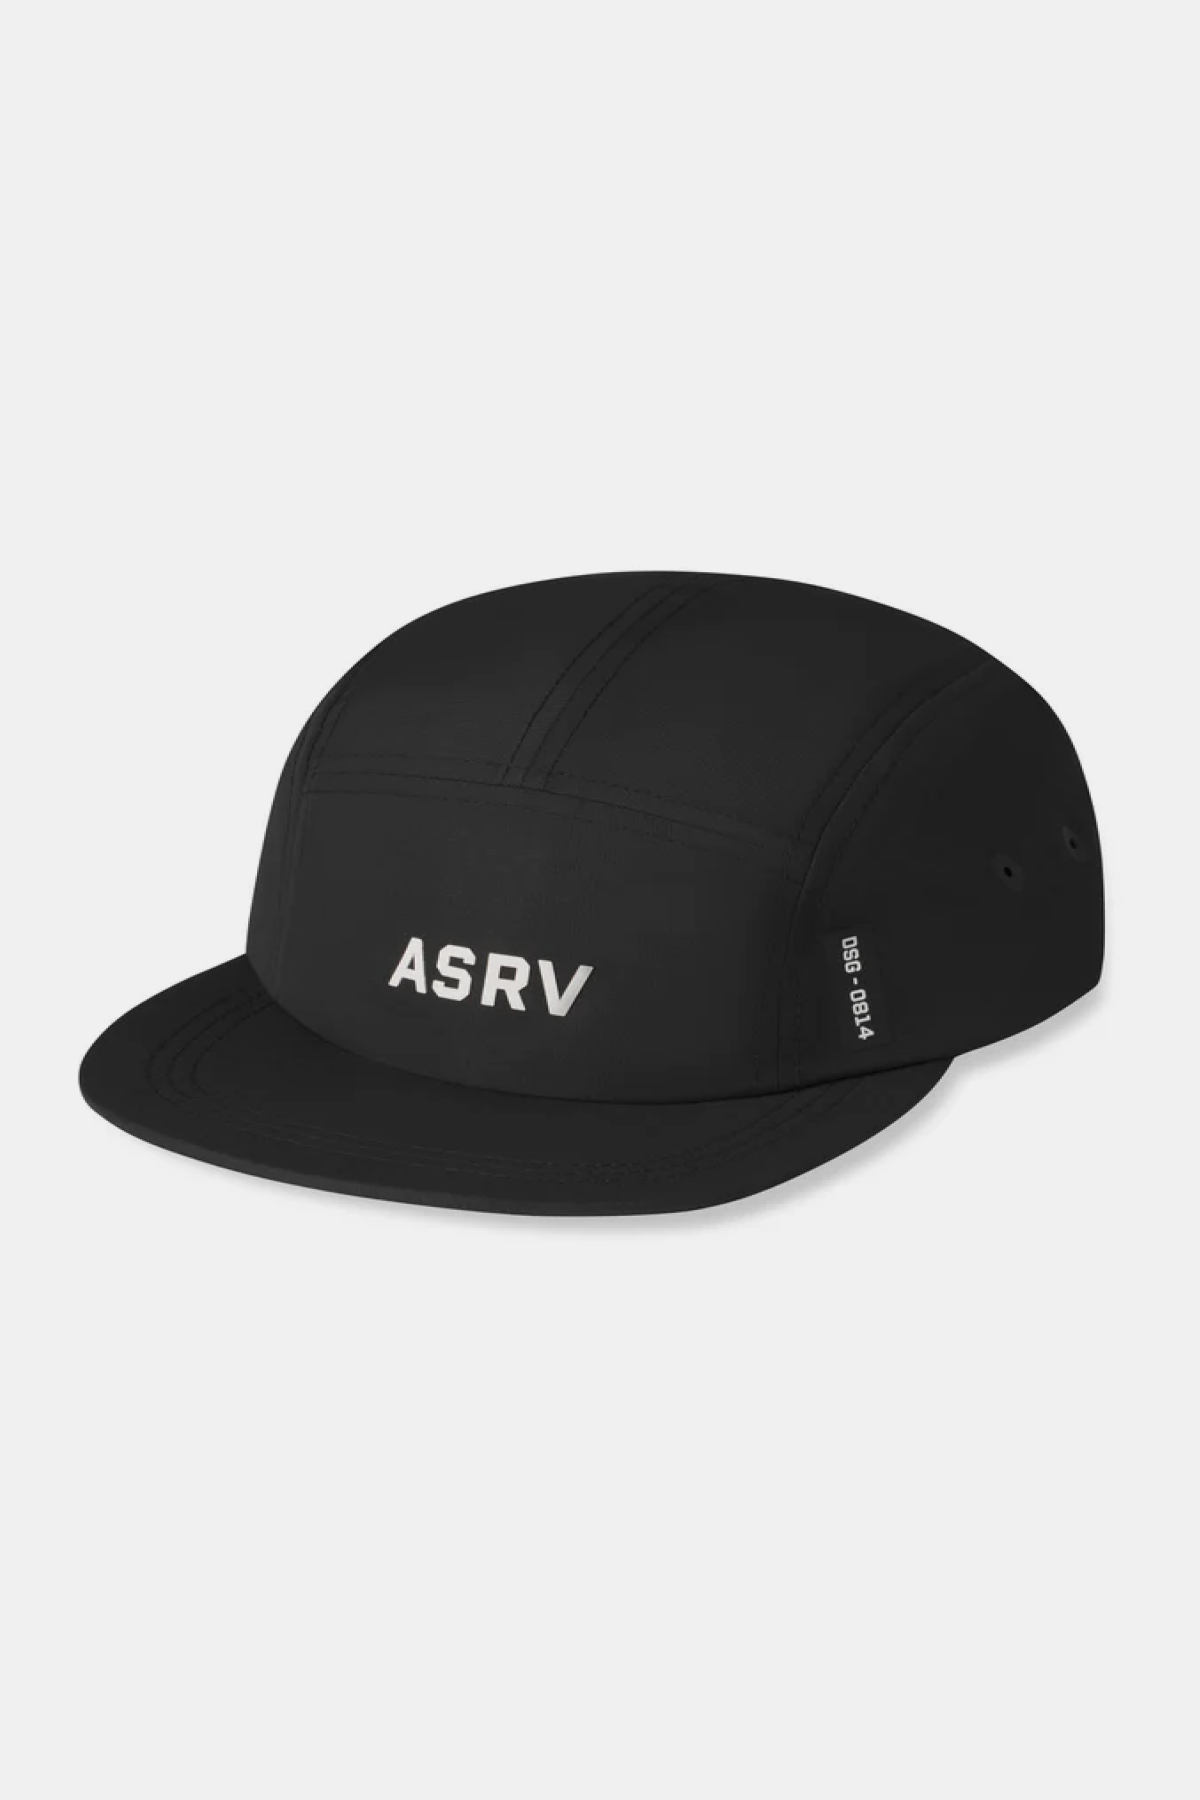 ASRV 5 Panel Run Cap - Black